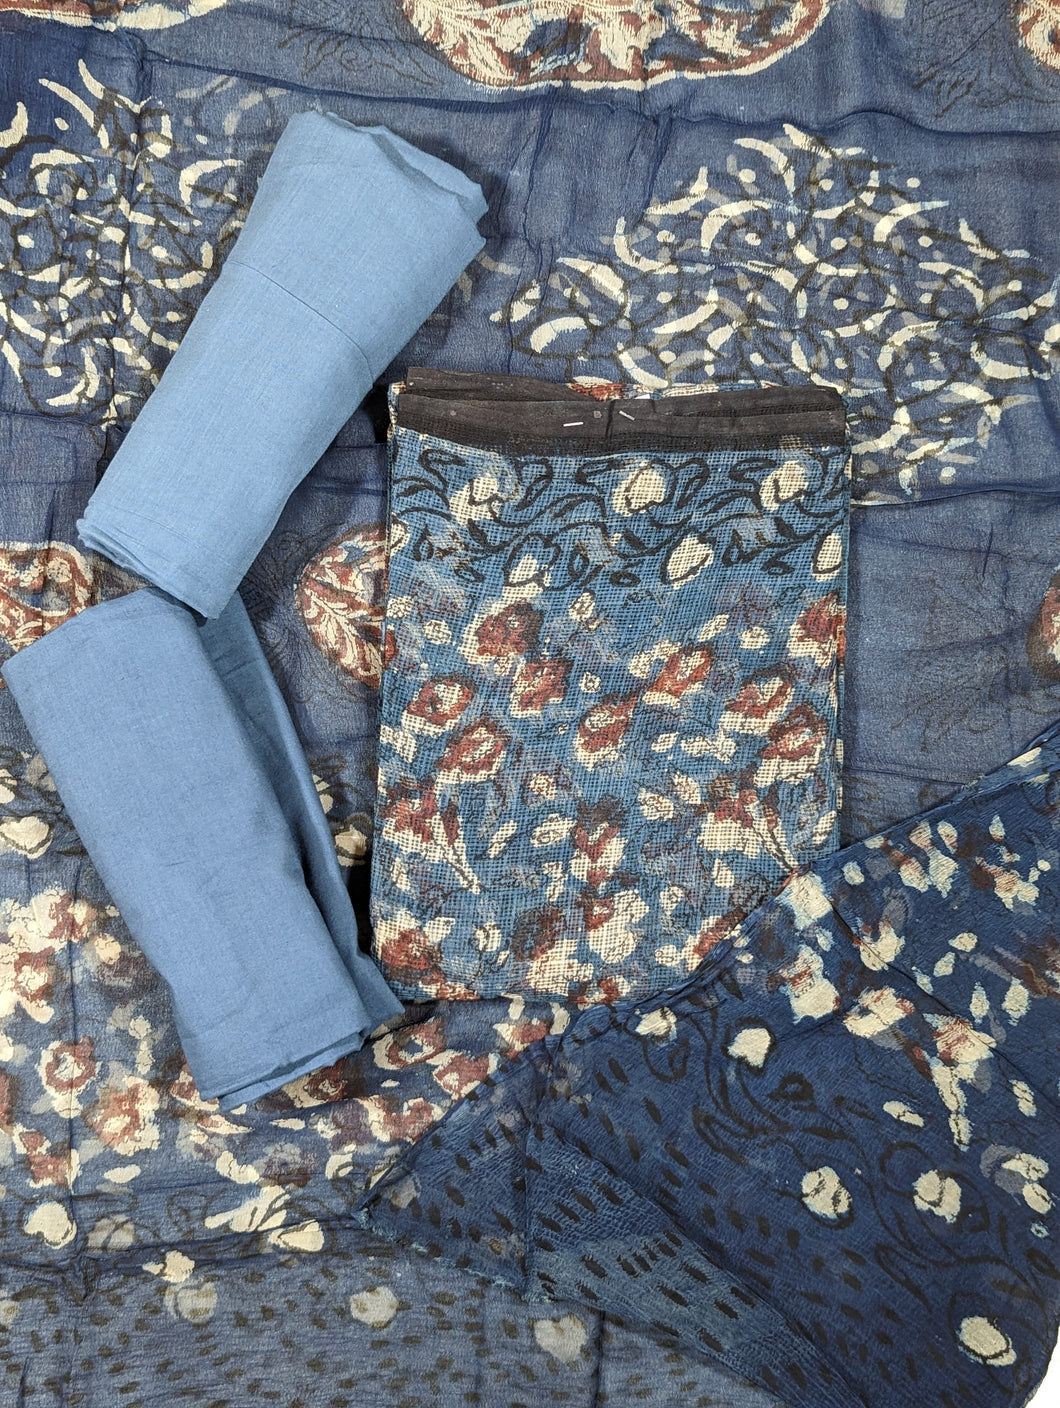 Indigo Blue And Maroon Pure Kotta Cotton Unstitched Suit-3365